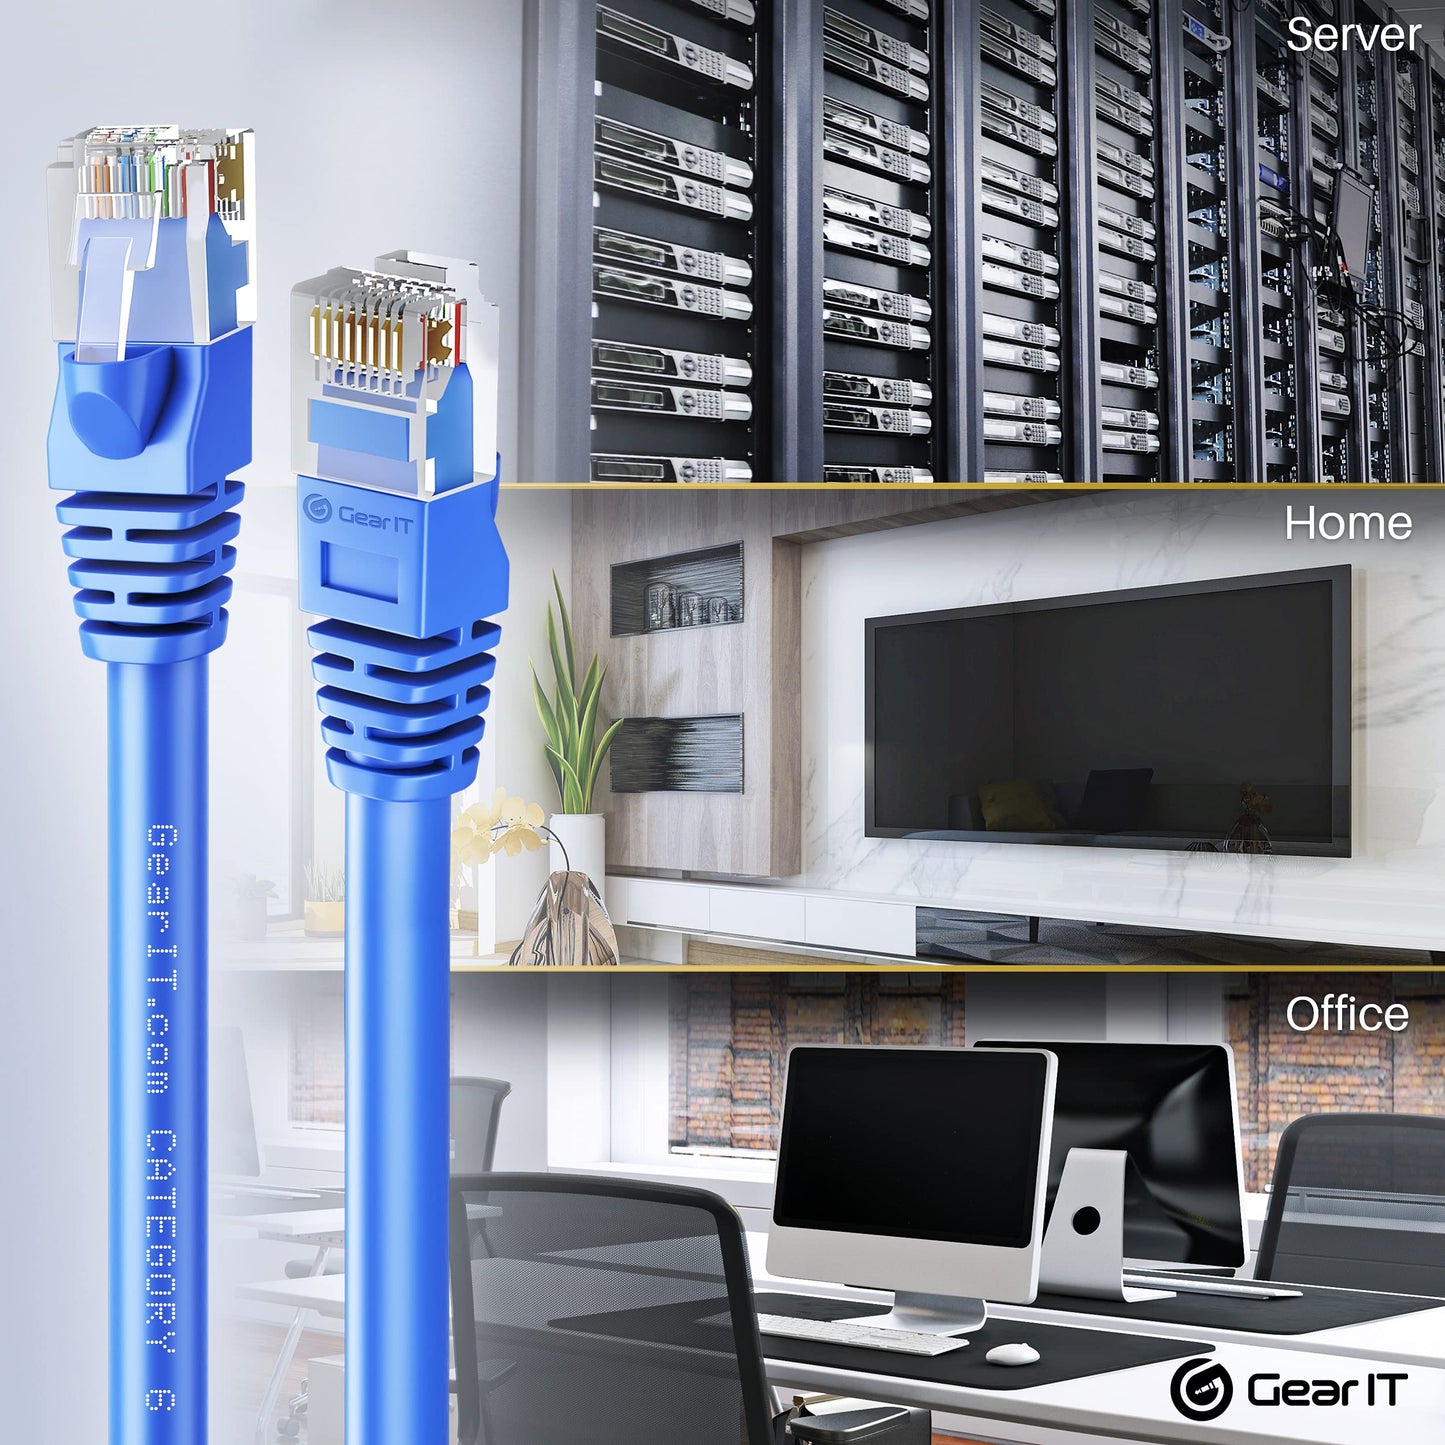 GearIT Cat 6 Ethernet Cable 6 ft (10-Pack) - Cat6 Patch Cable, Cat 6 Patch Cable, Cat6 Cable, Cat 6 Cable, Cat6 Ethernet Cable, Network Cable, Internet Cable - Blue 6 Feet